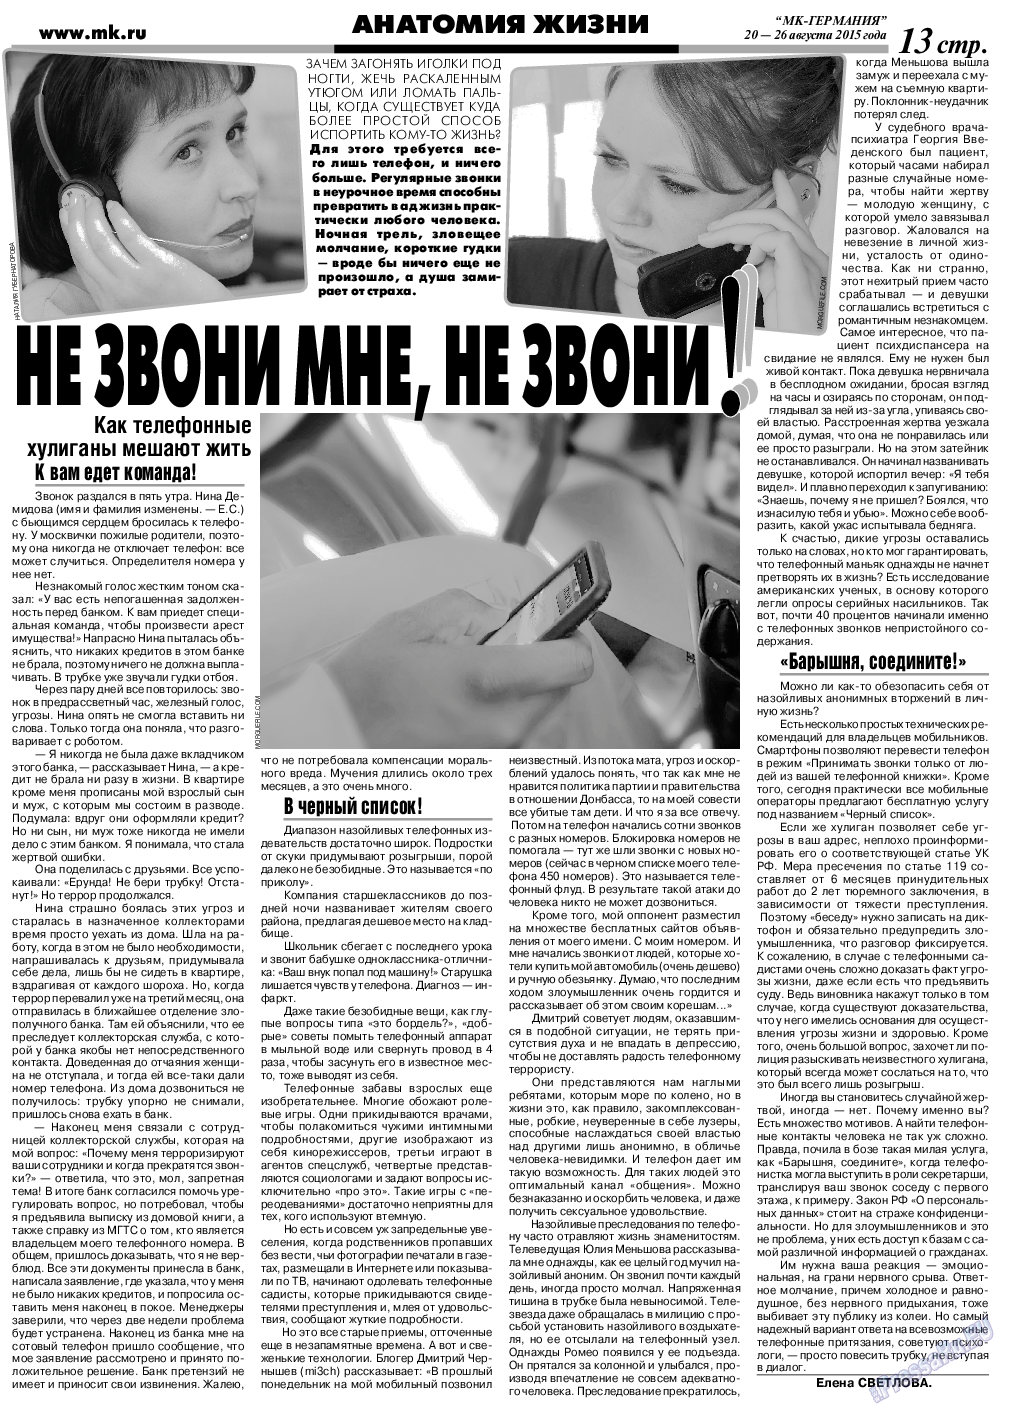 МК-Германия, газета. 2015 №34 стр.13